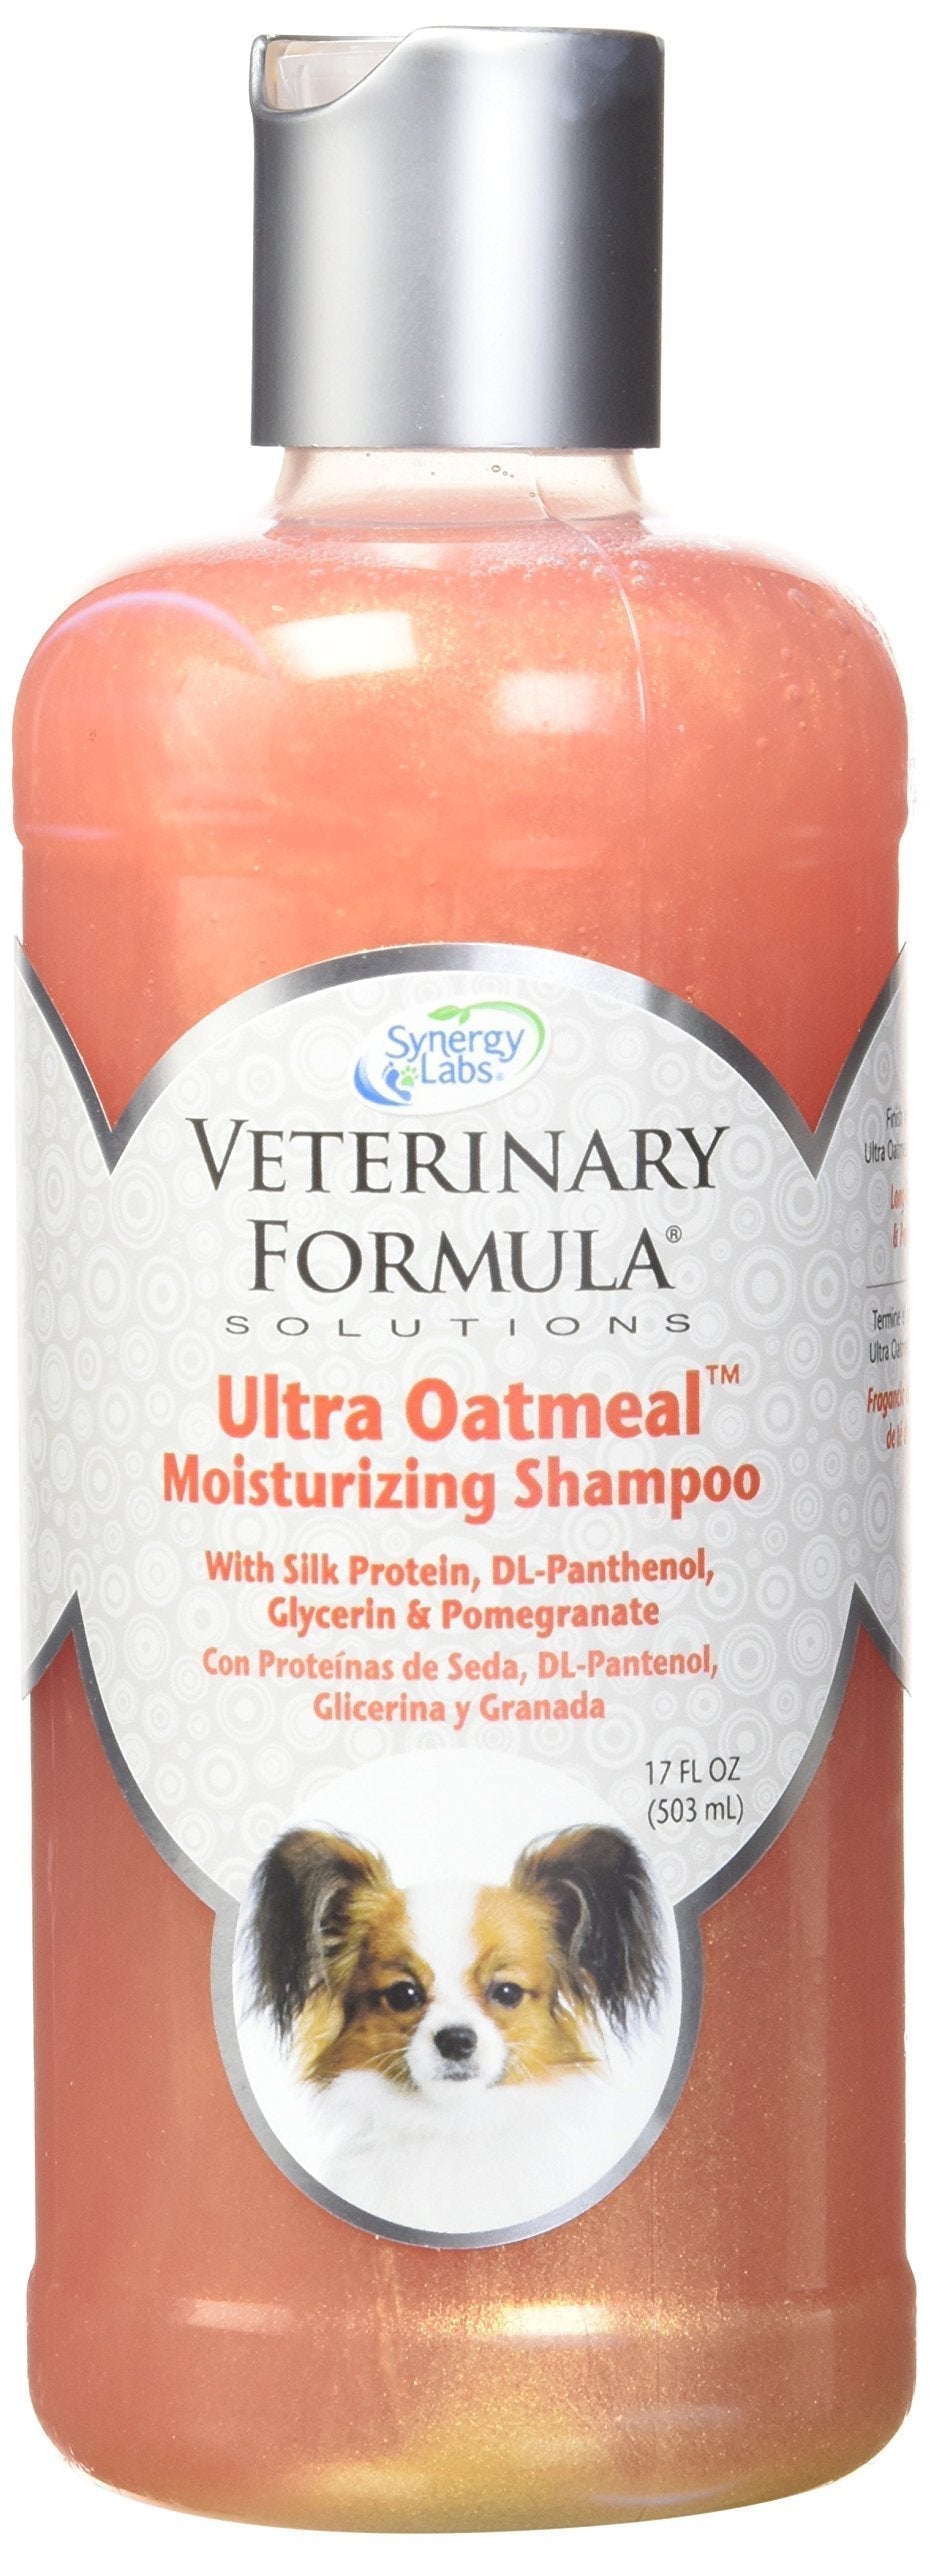 [Australia] - Veterinary Formula Solutions Ultra Oatmeal Moisturizing Shampoo for Dogs, 17 oz. – Moisture-Rich Nourishing Shampoo – Leaves Coat Clean, Soft, Silky, Shiny 